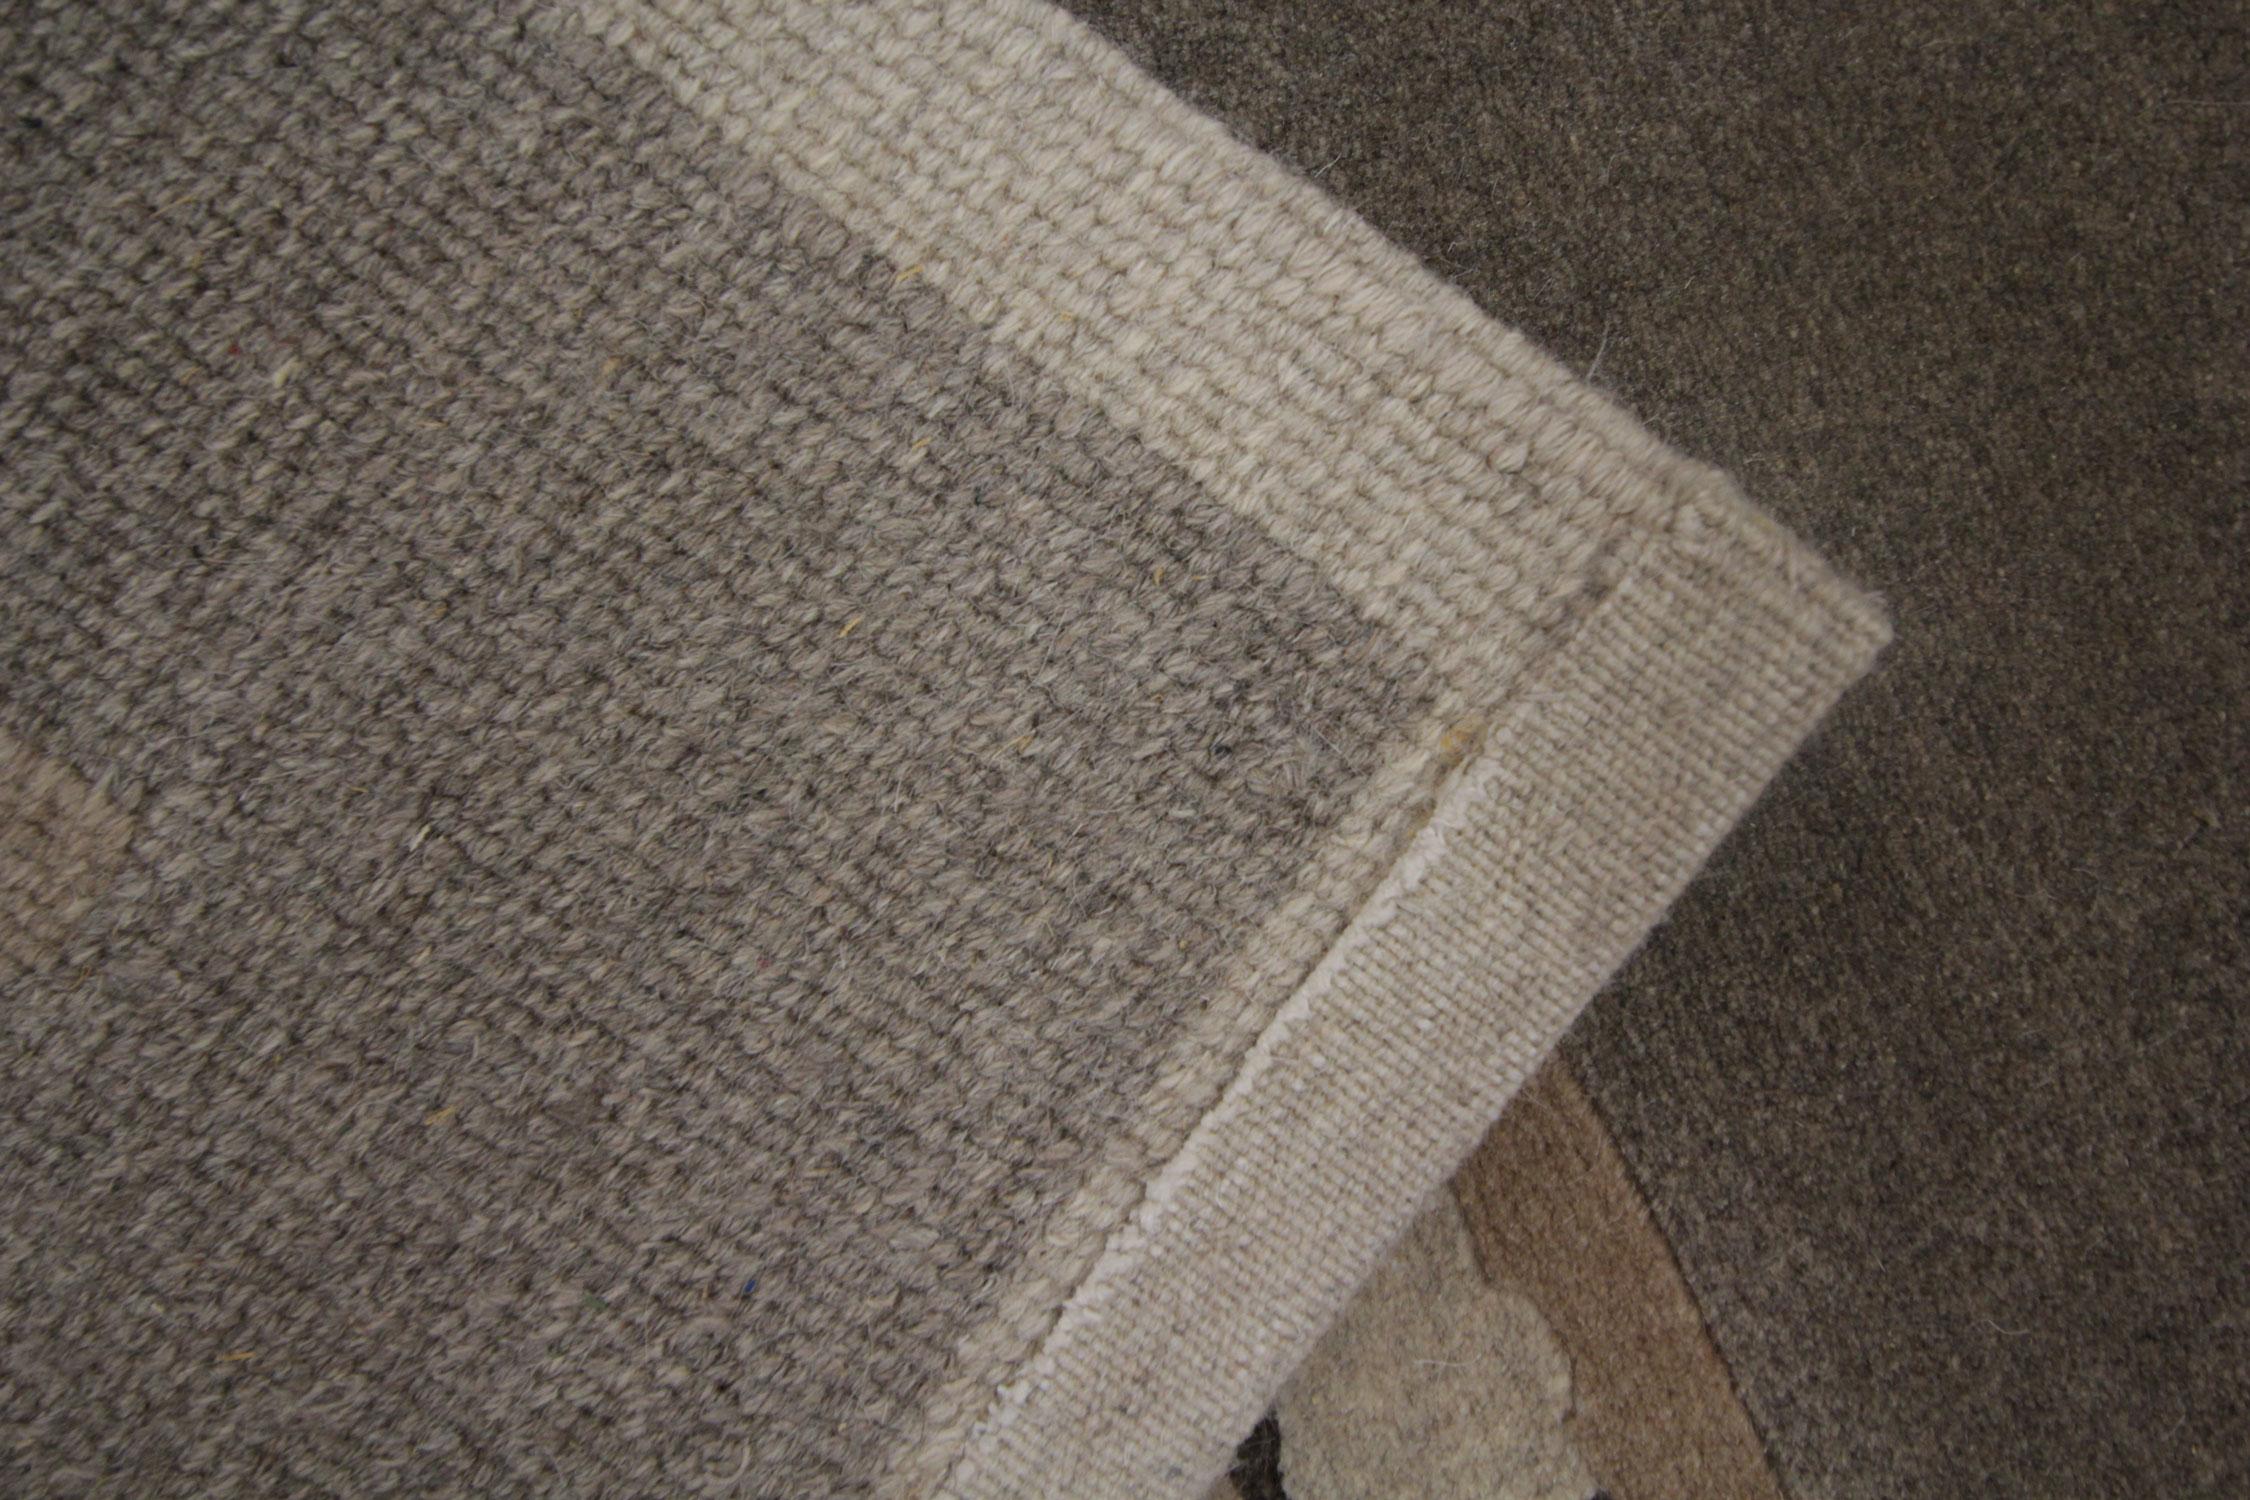 modern handmade rugs